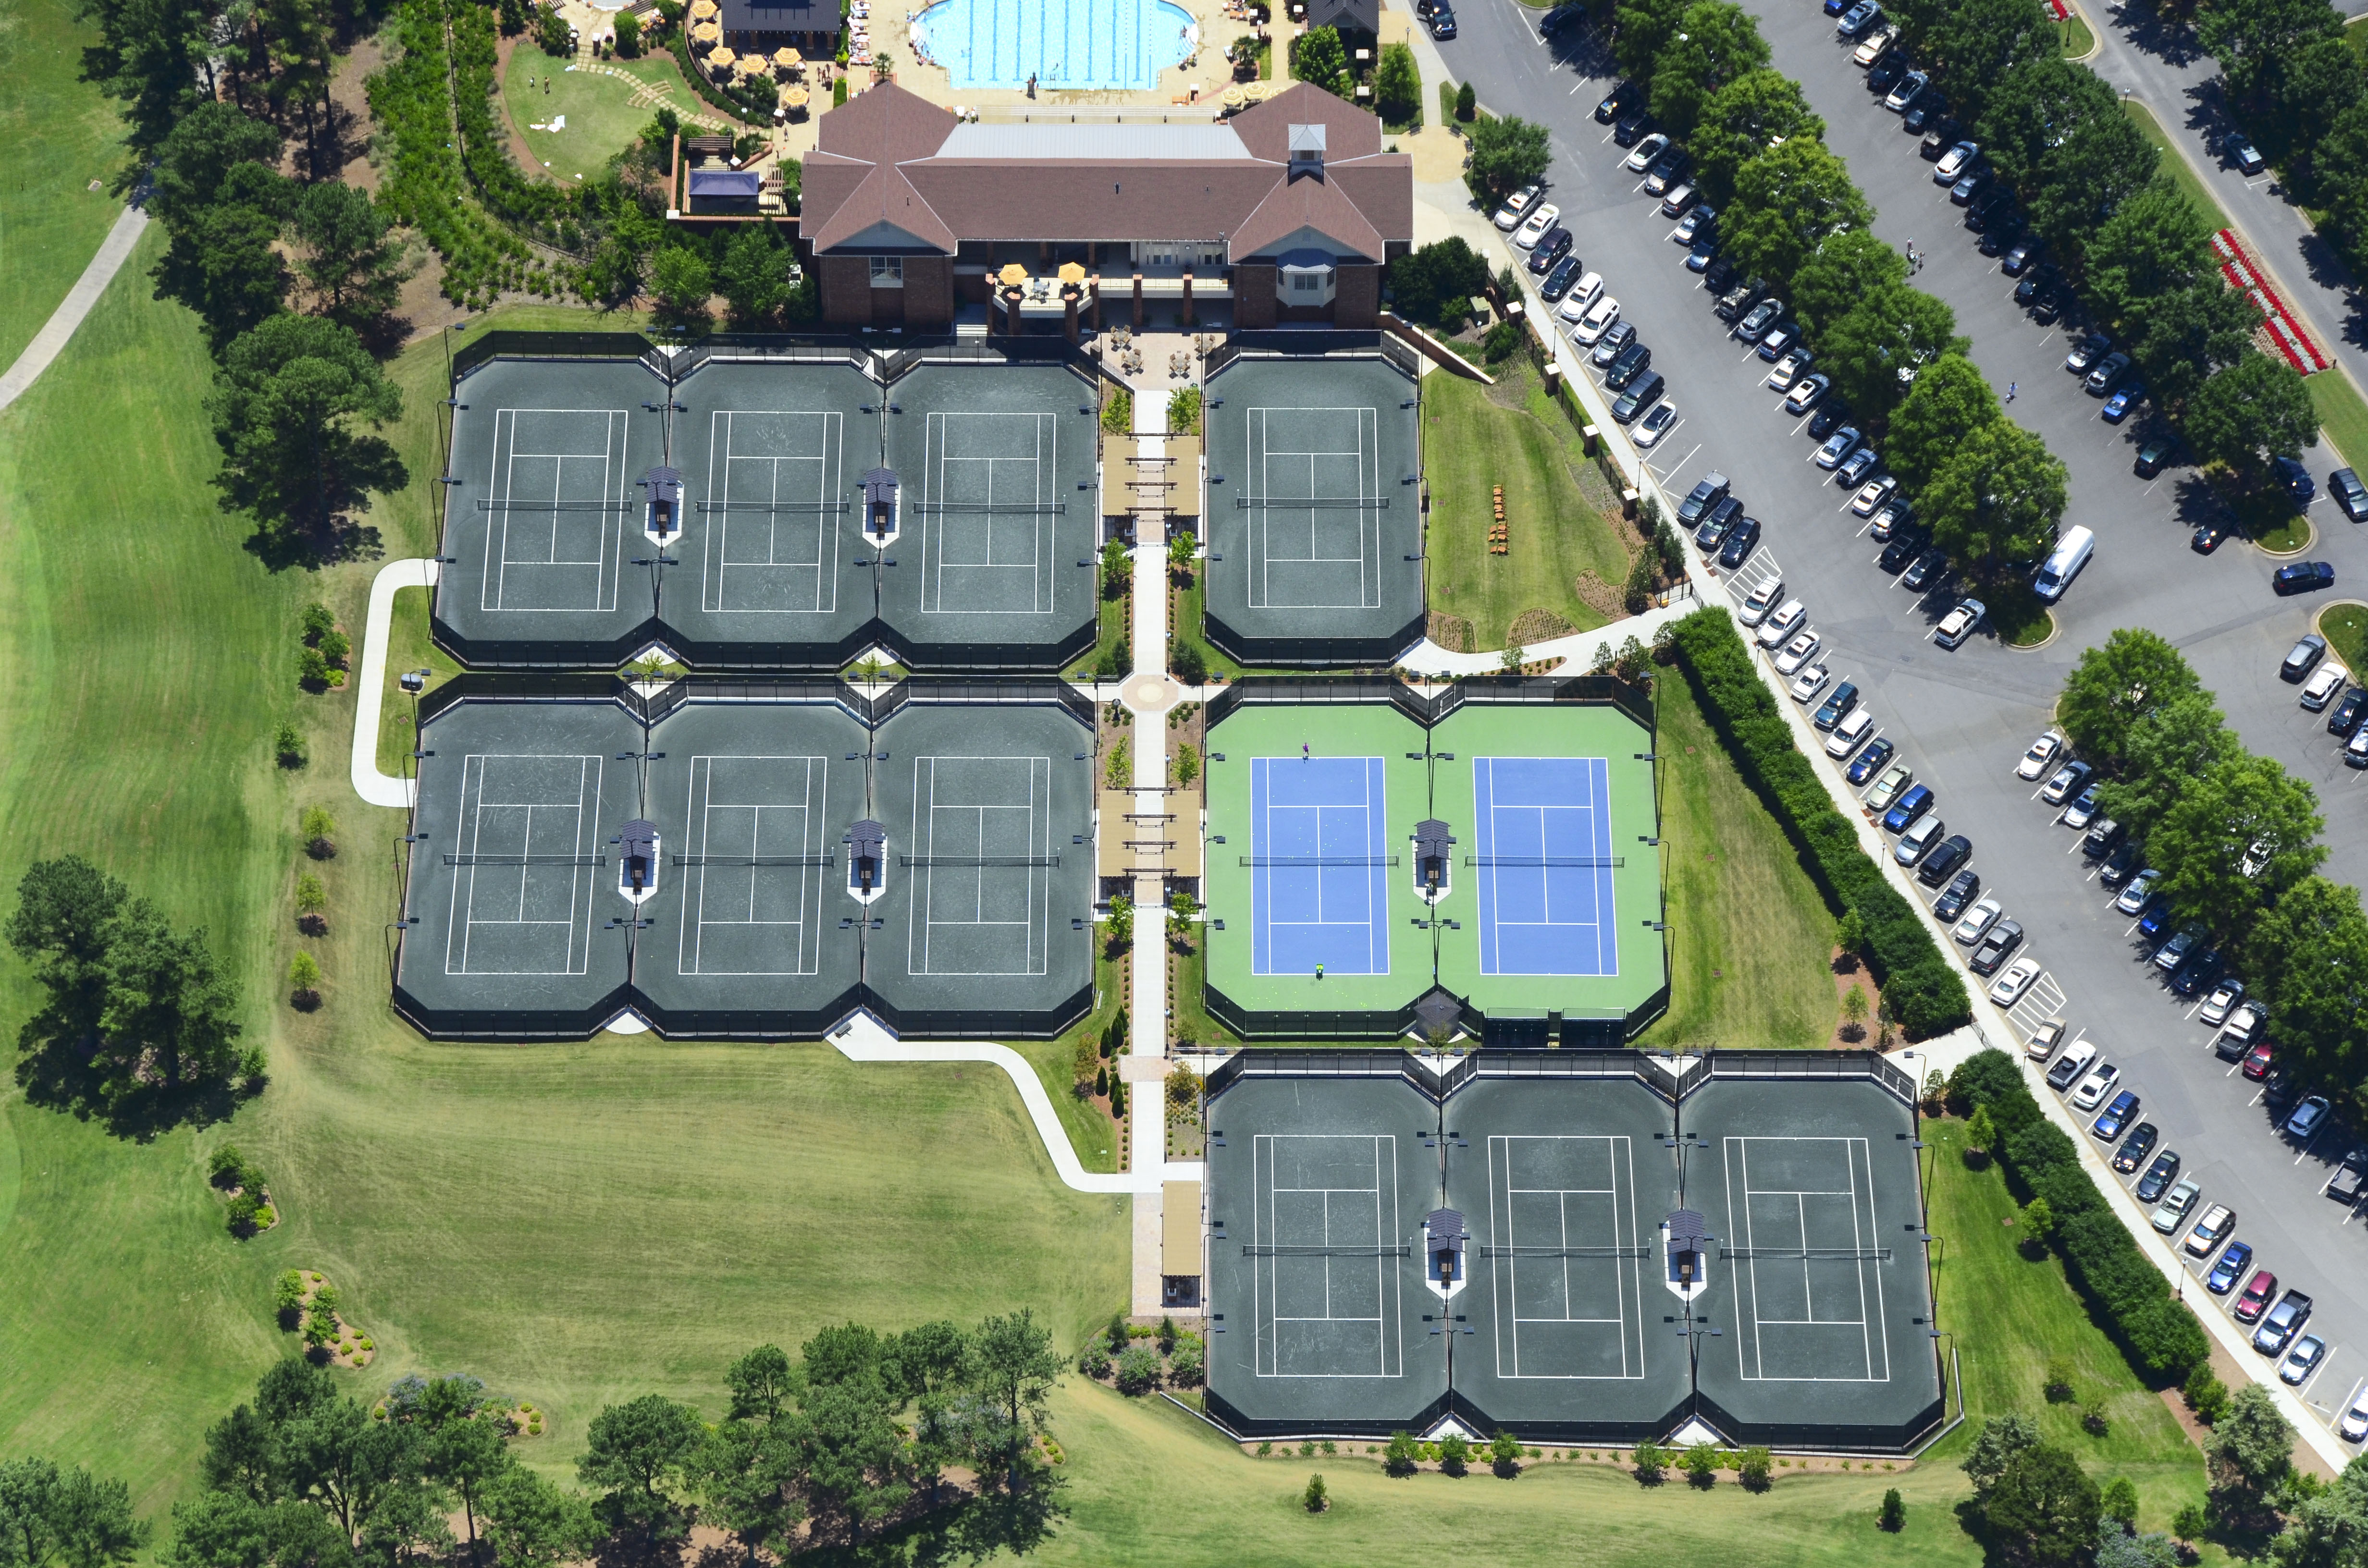 Clay Tennis Courts | Clay Court Tennis | Maintenance ...